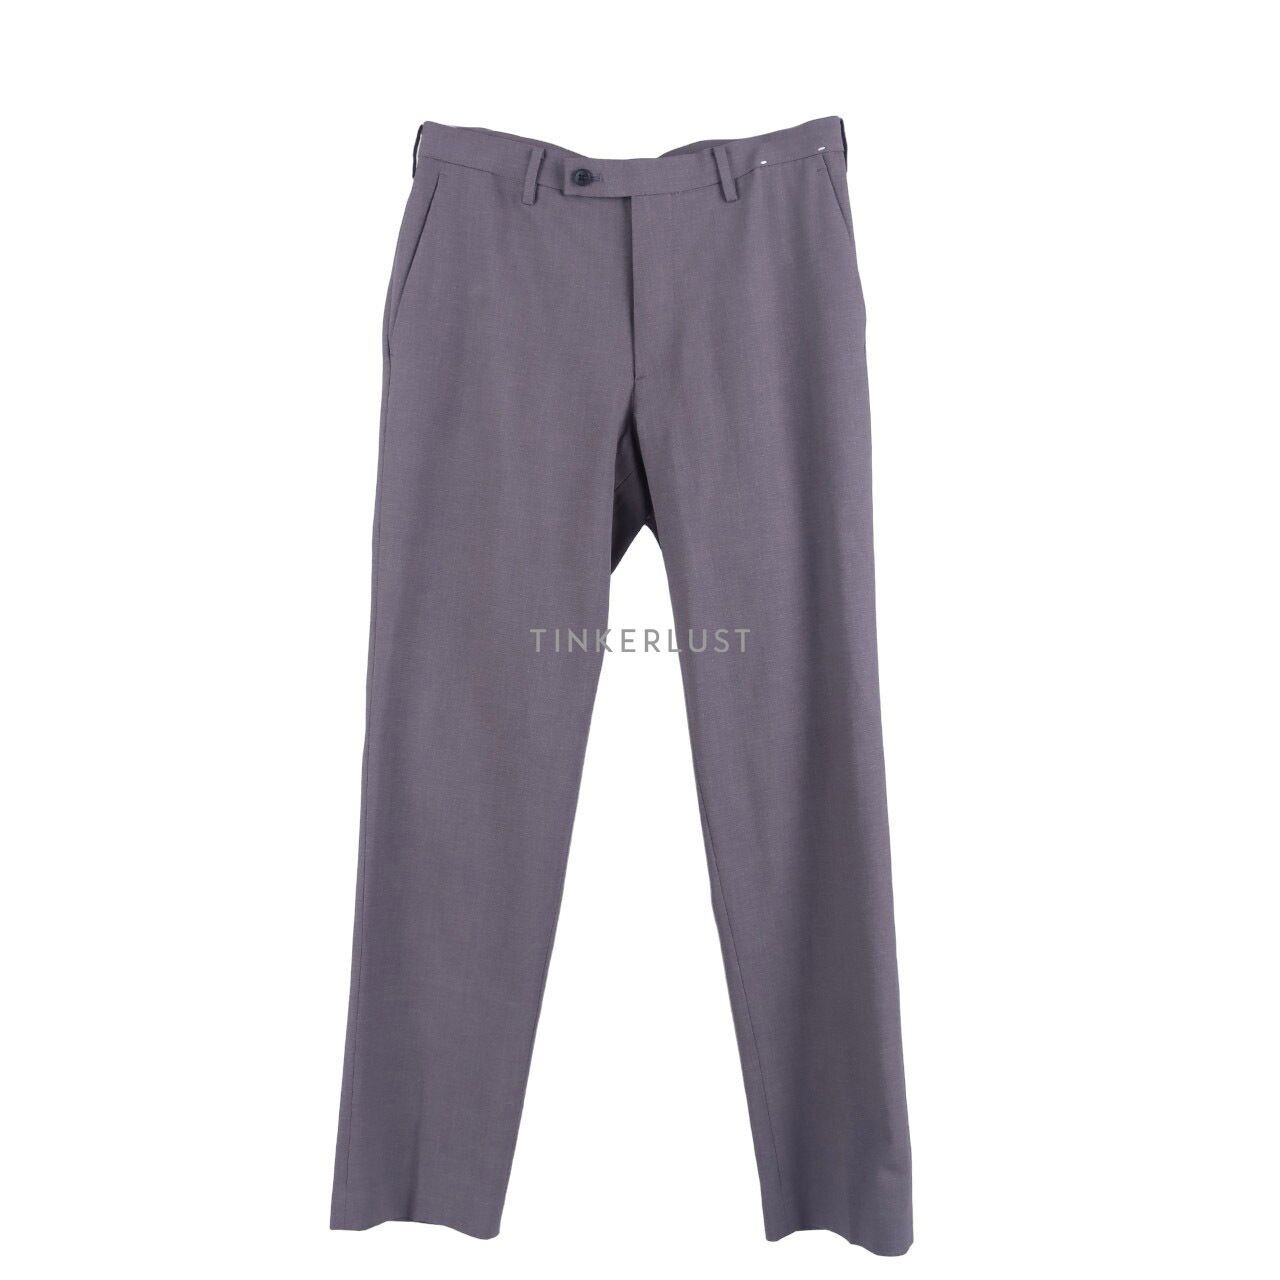 UNIQLO Grey Long Pants